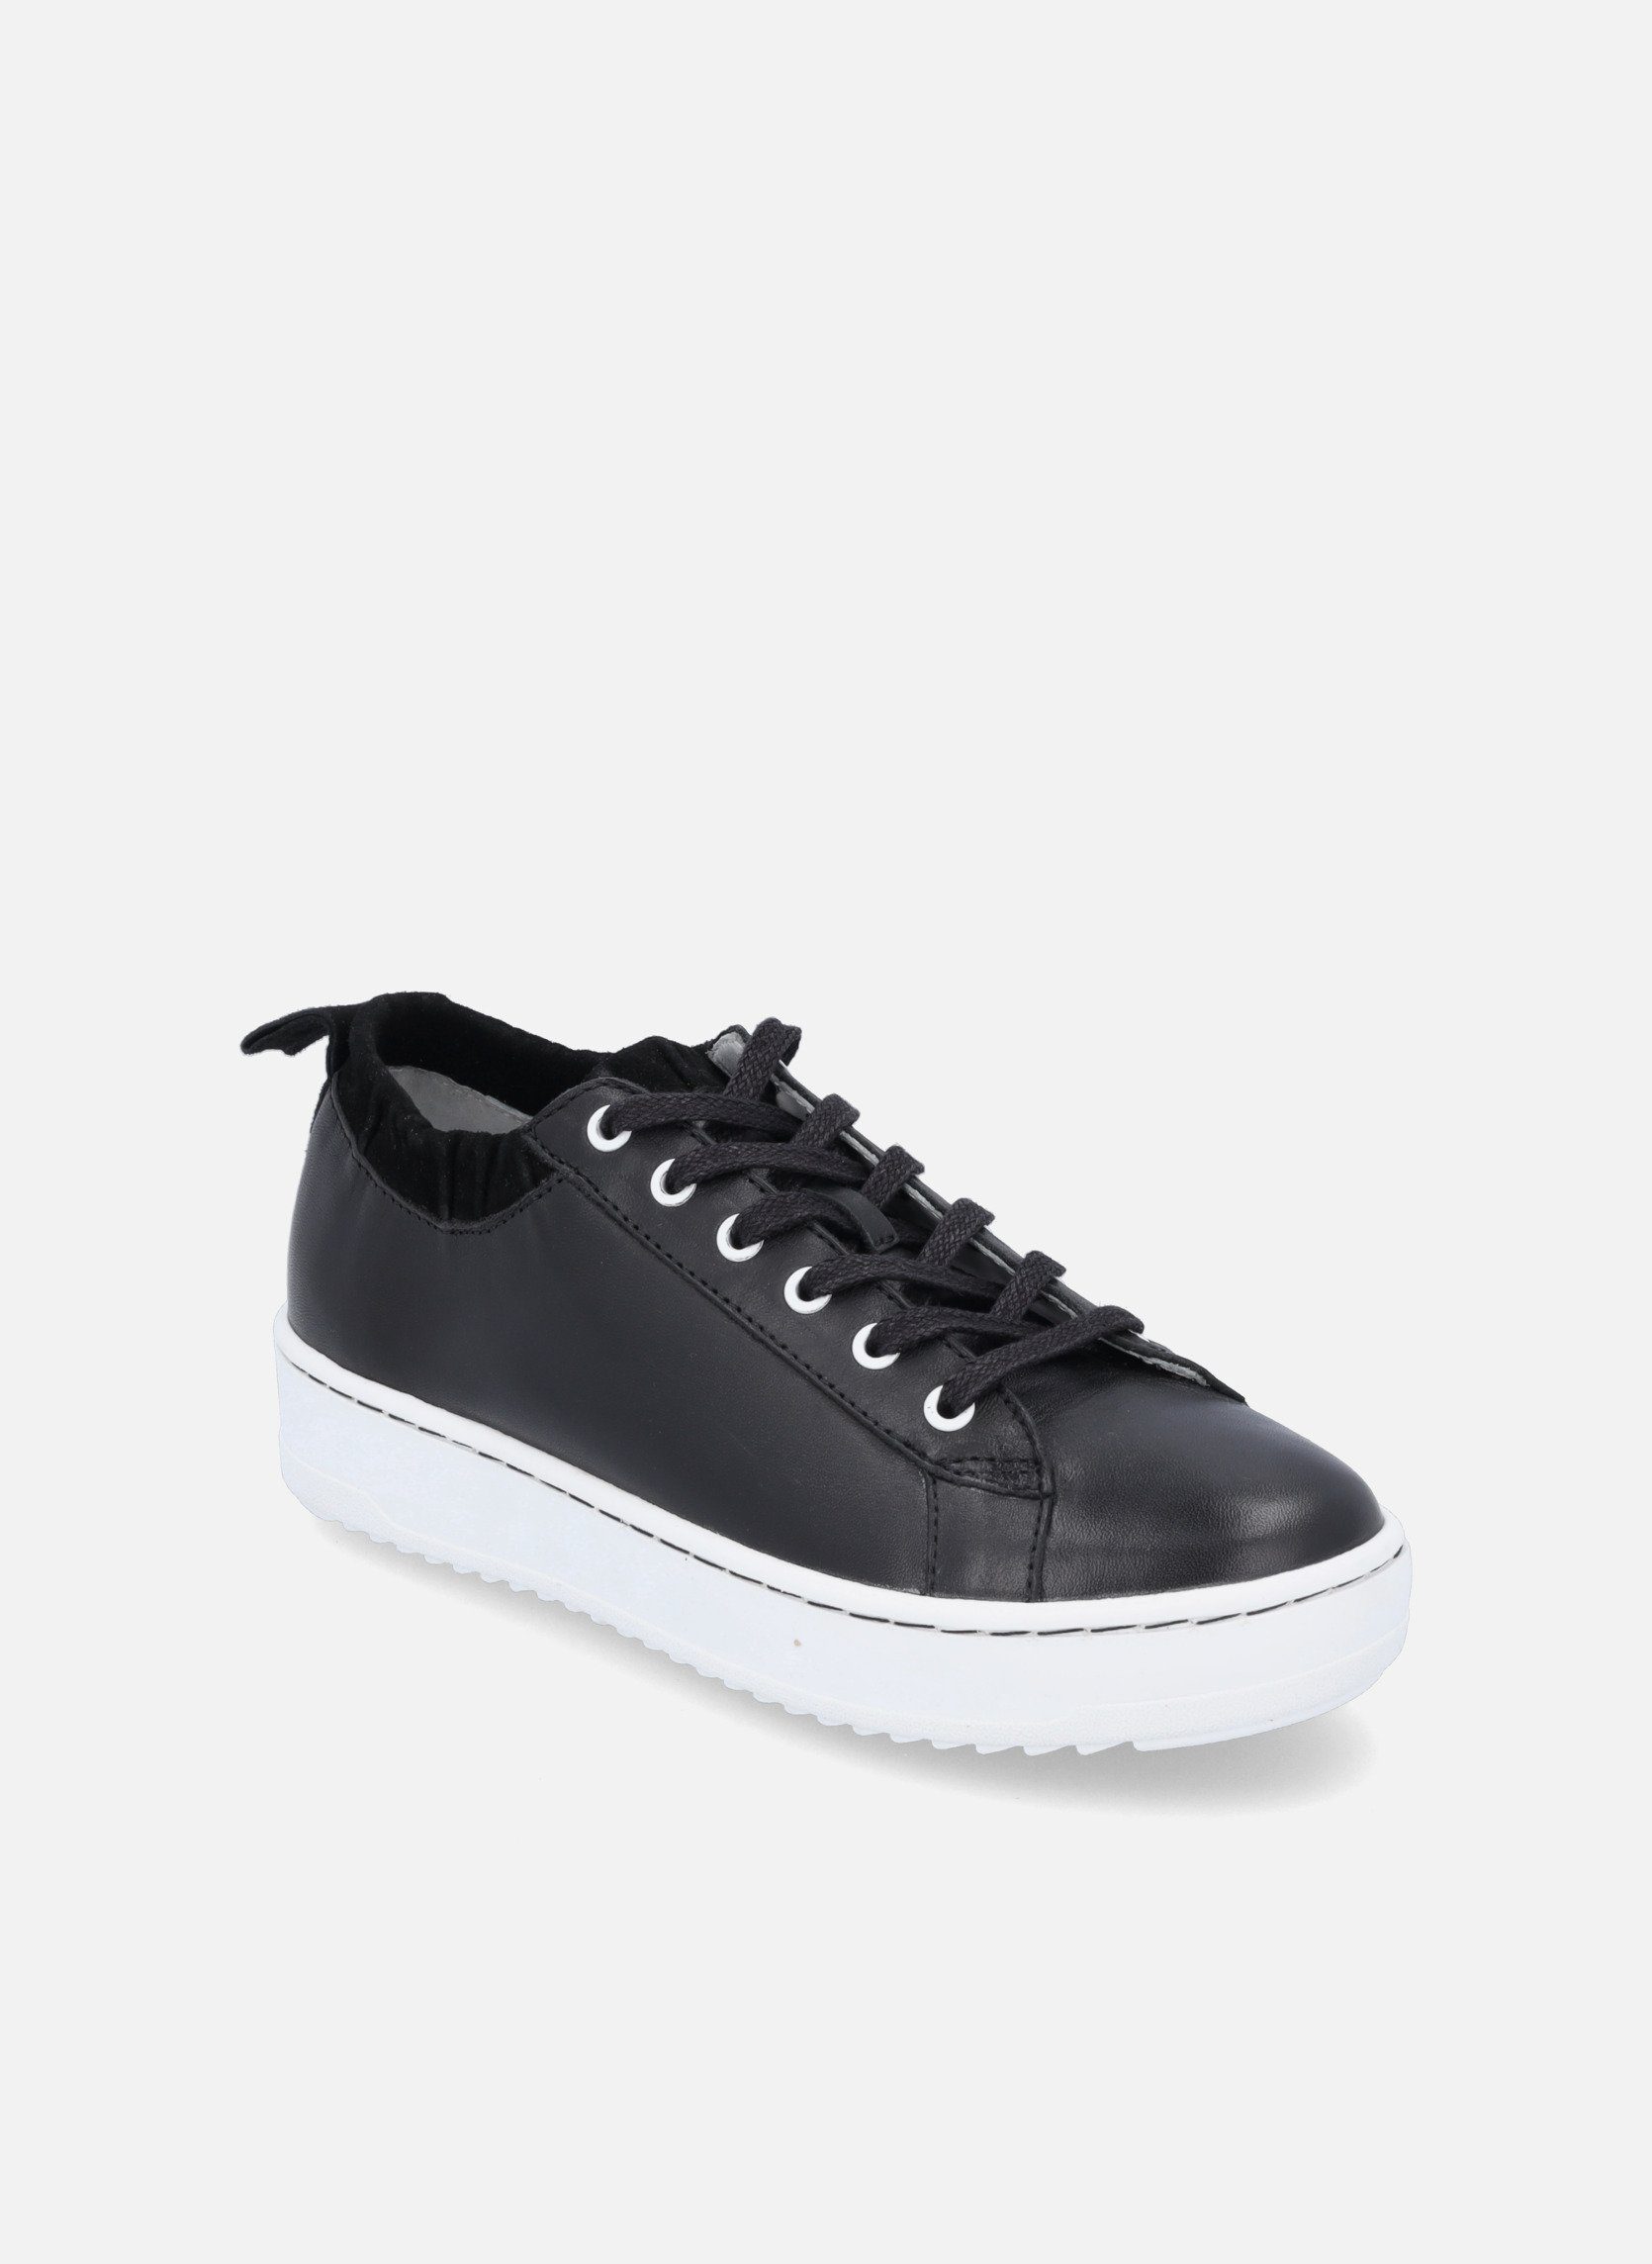 GERRY WEBER Emilia 17, schwarz Sneaker